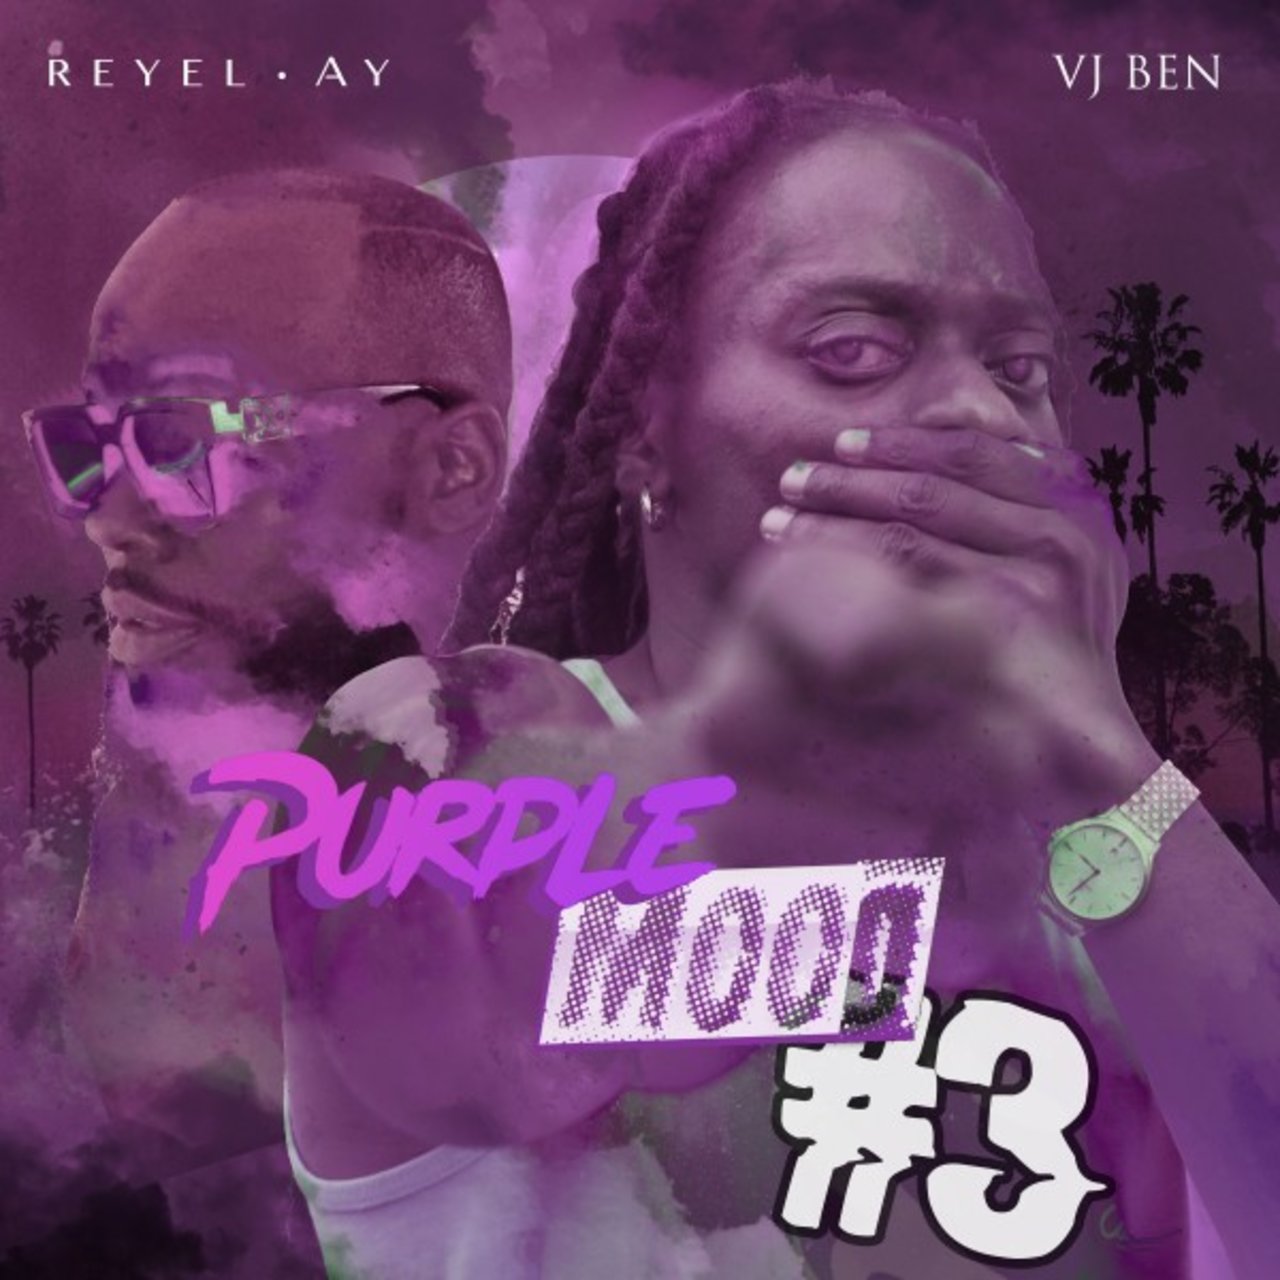 VJ Ben - Purple Mood #3 (ft. Reyel Ay) (Cover)